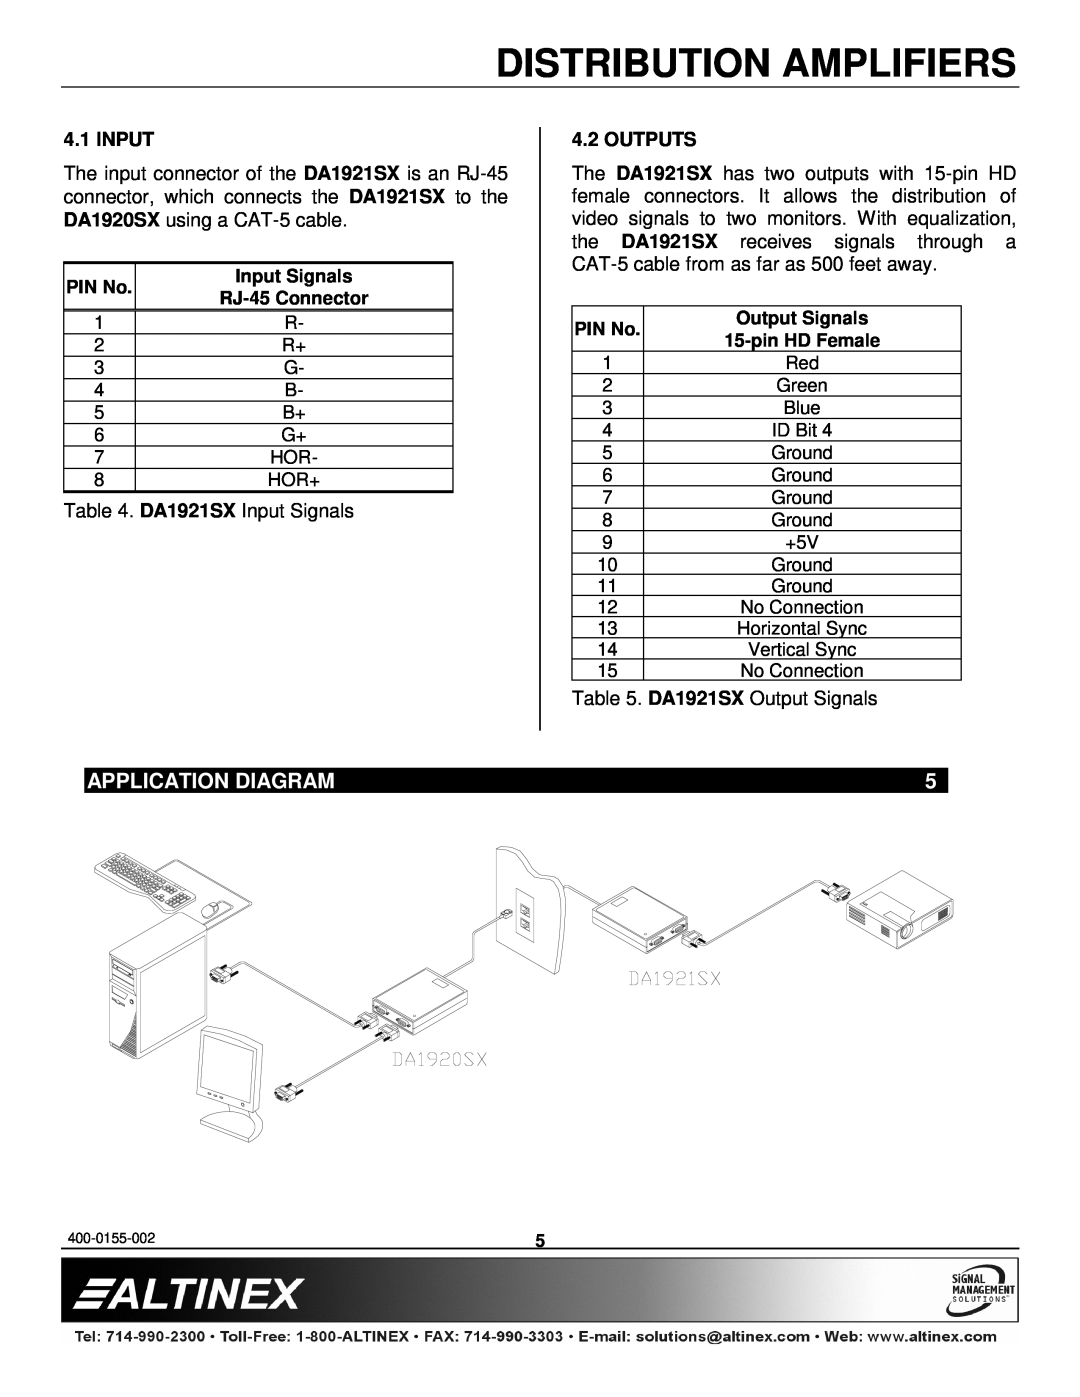 Altinex DA1921SX manual Application Diagram, Distribution Amplifiers, Input, Outputs 